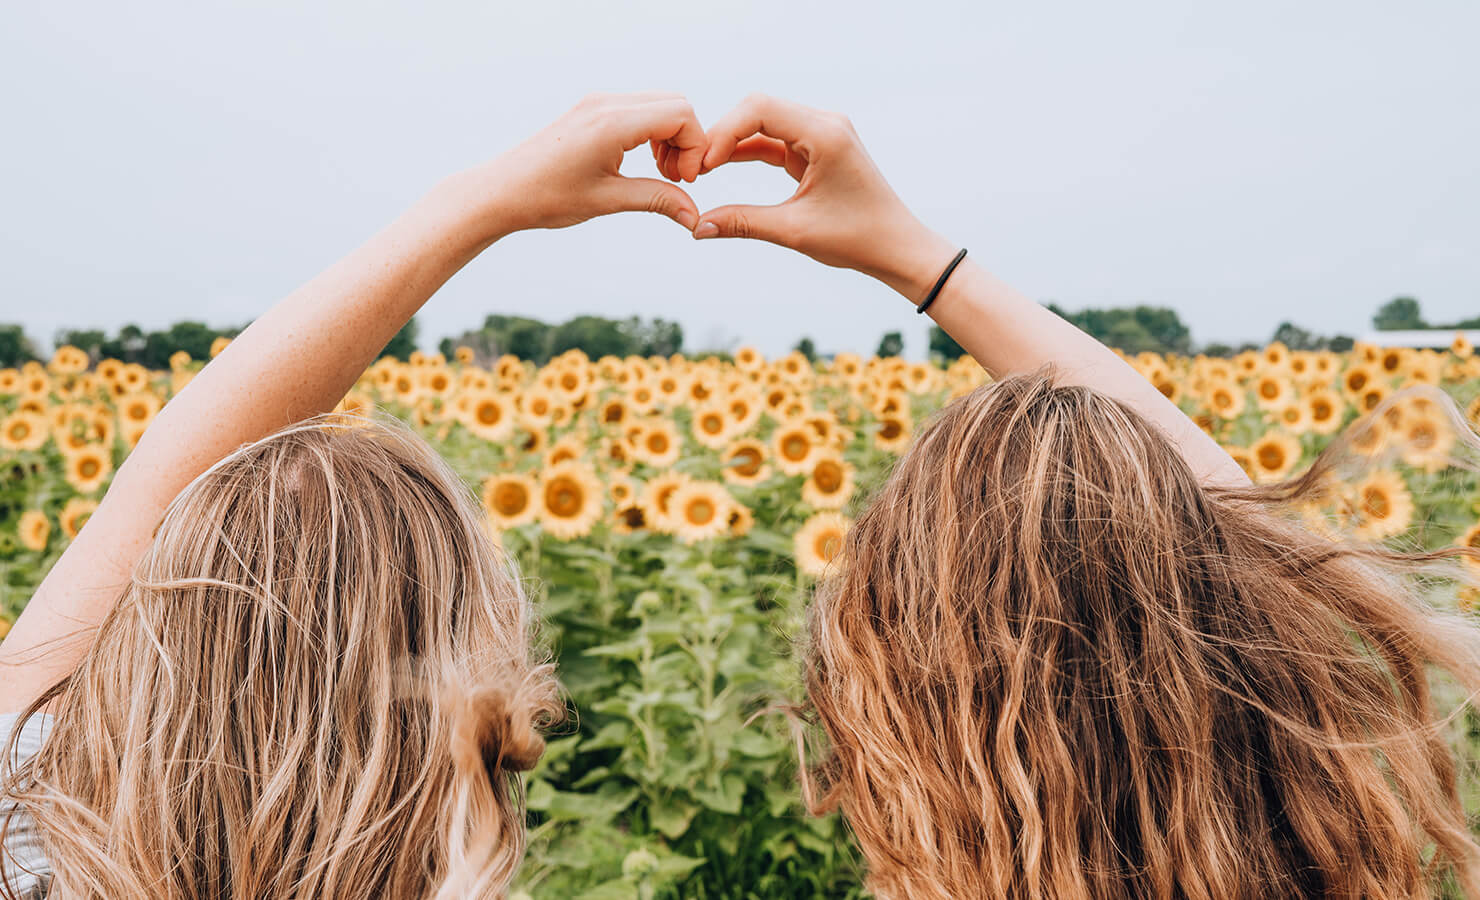 sunflower-symbol-of-friendship